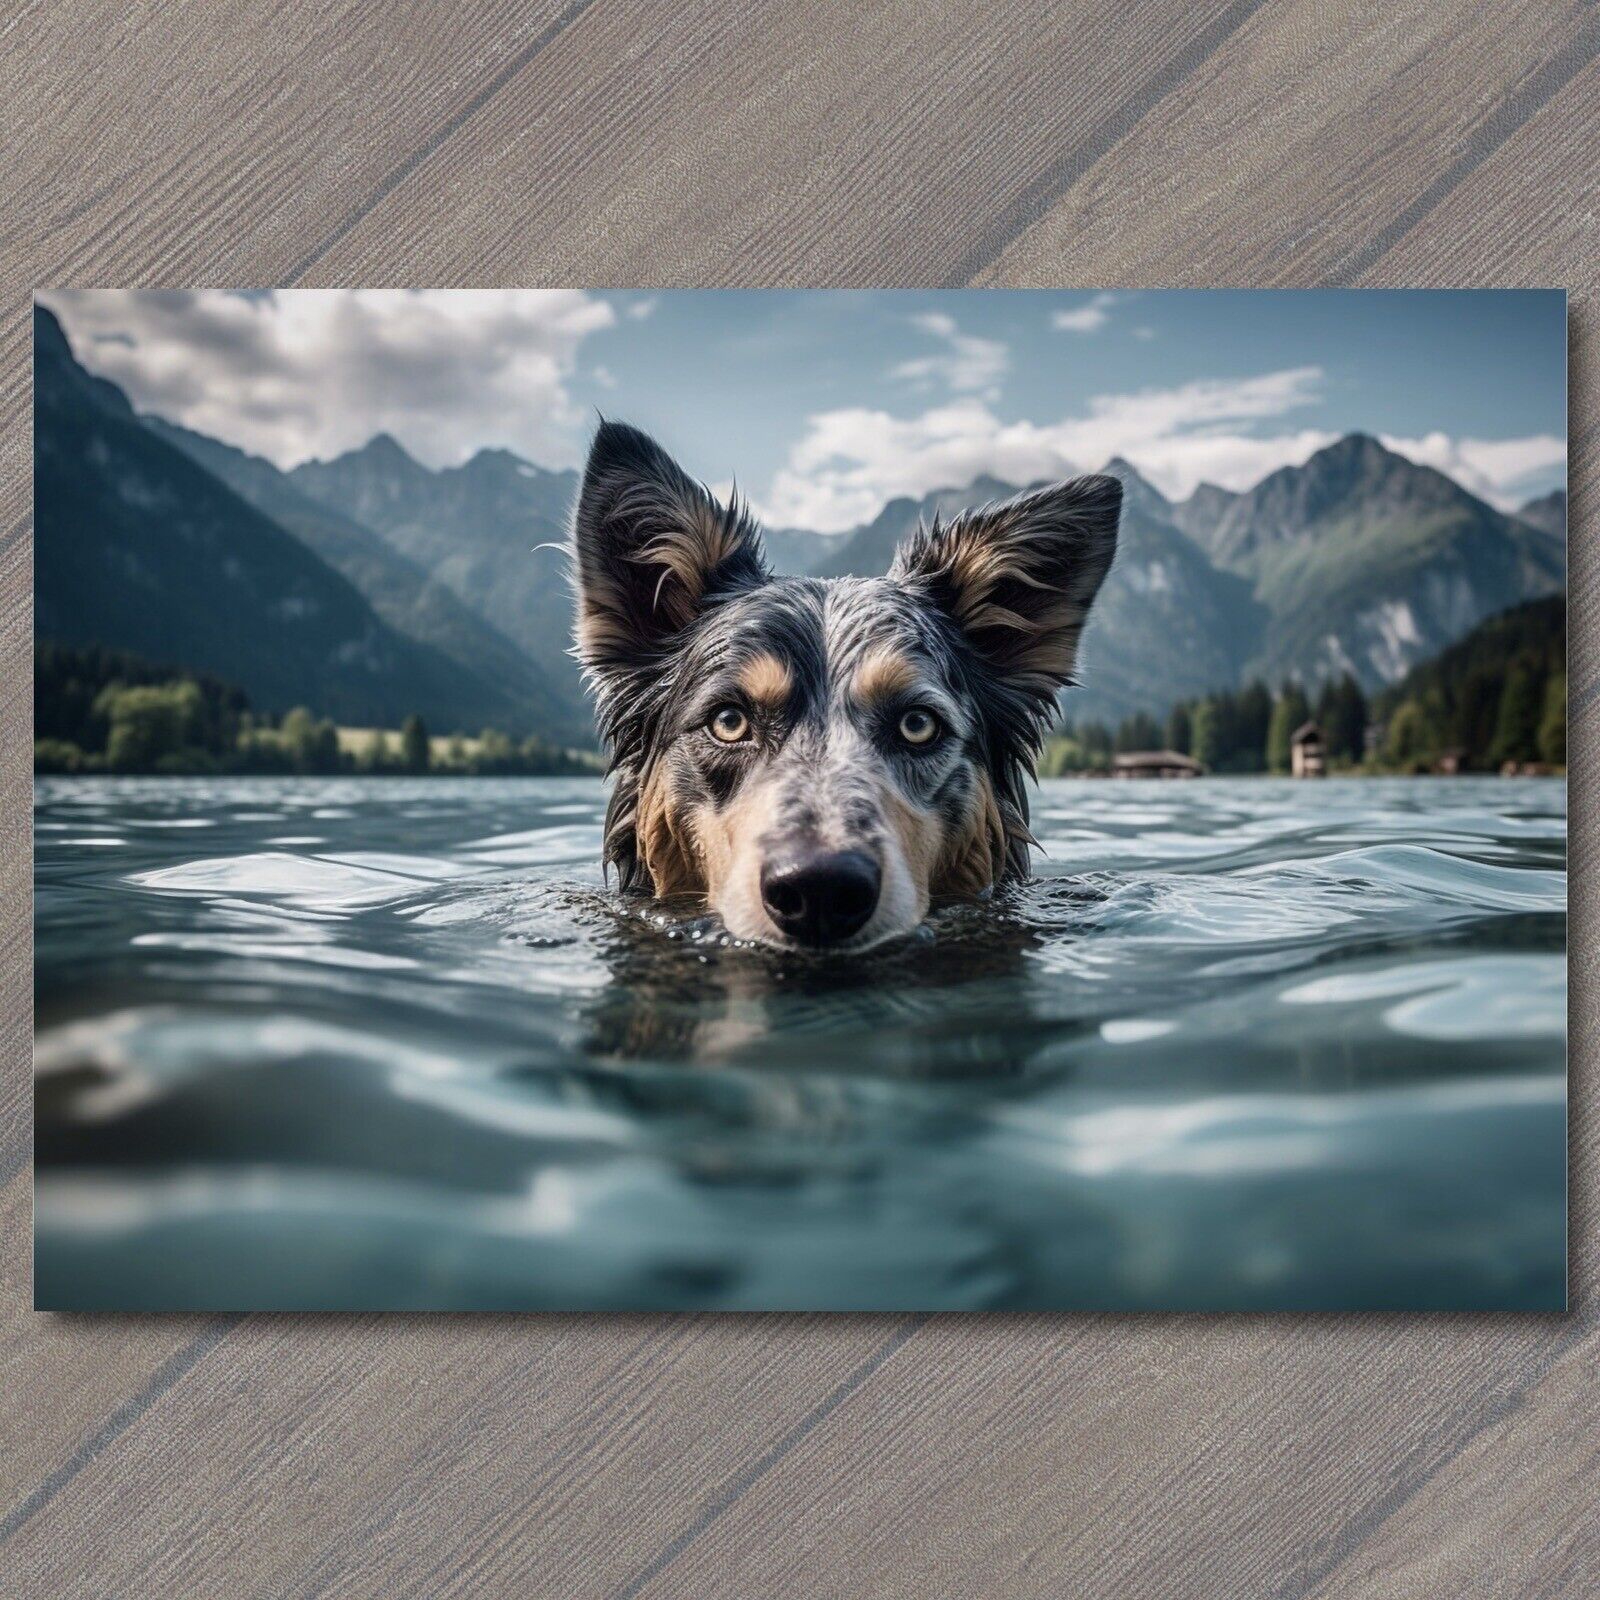 POSTCARD: Playful Dog Enjoying a Refreshing Swim Amidst Majestic Mountains 🐾🏞️